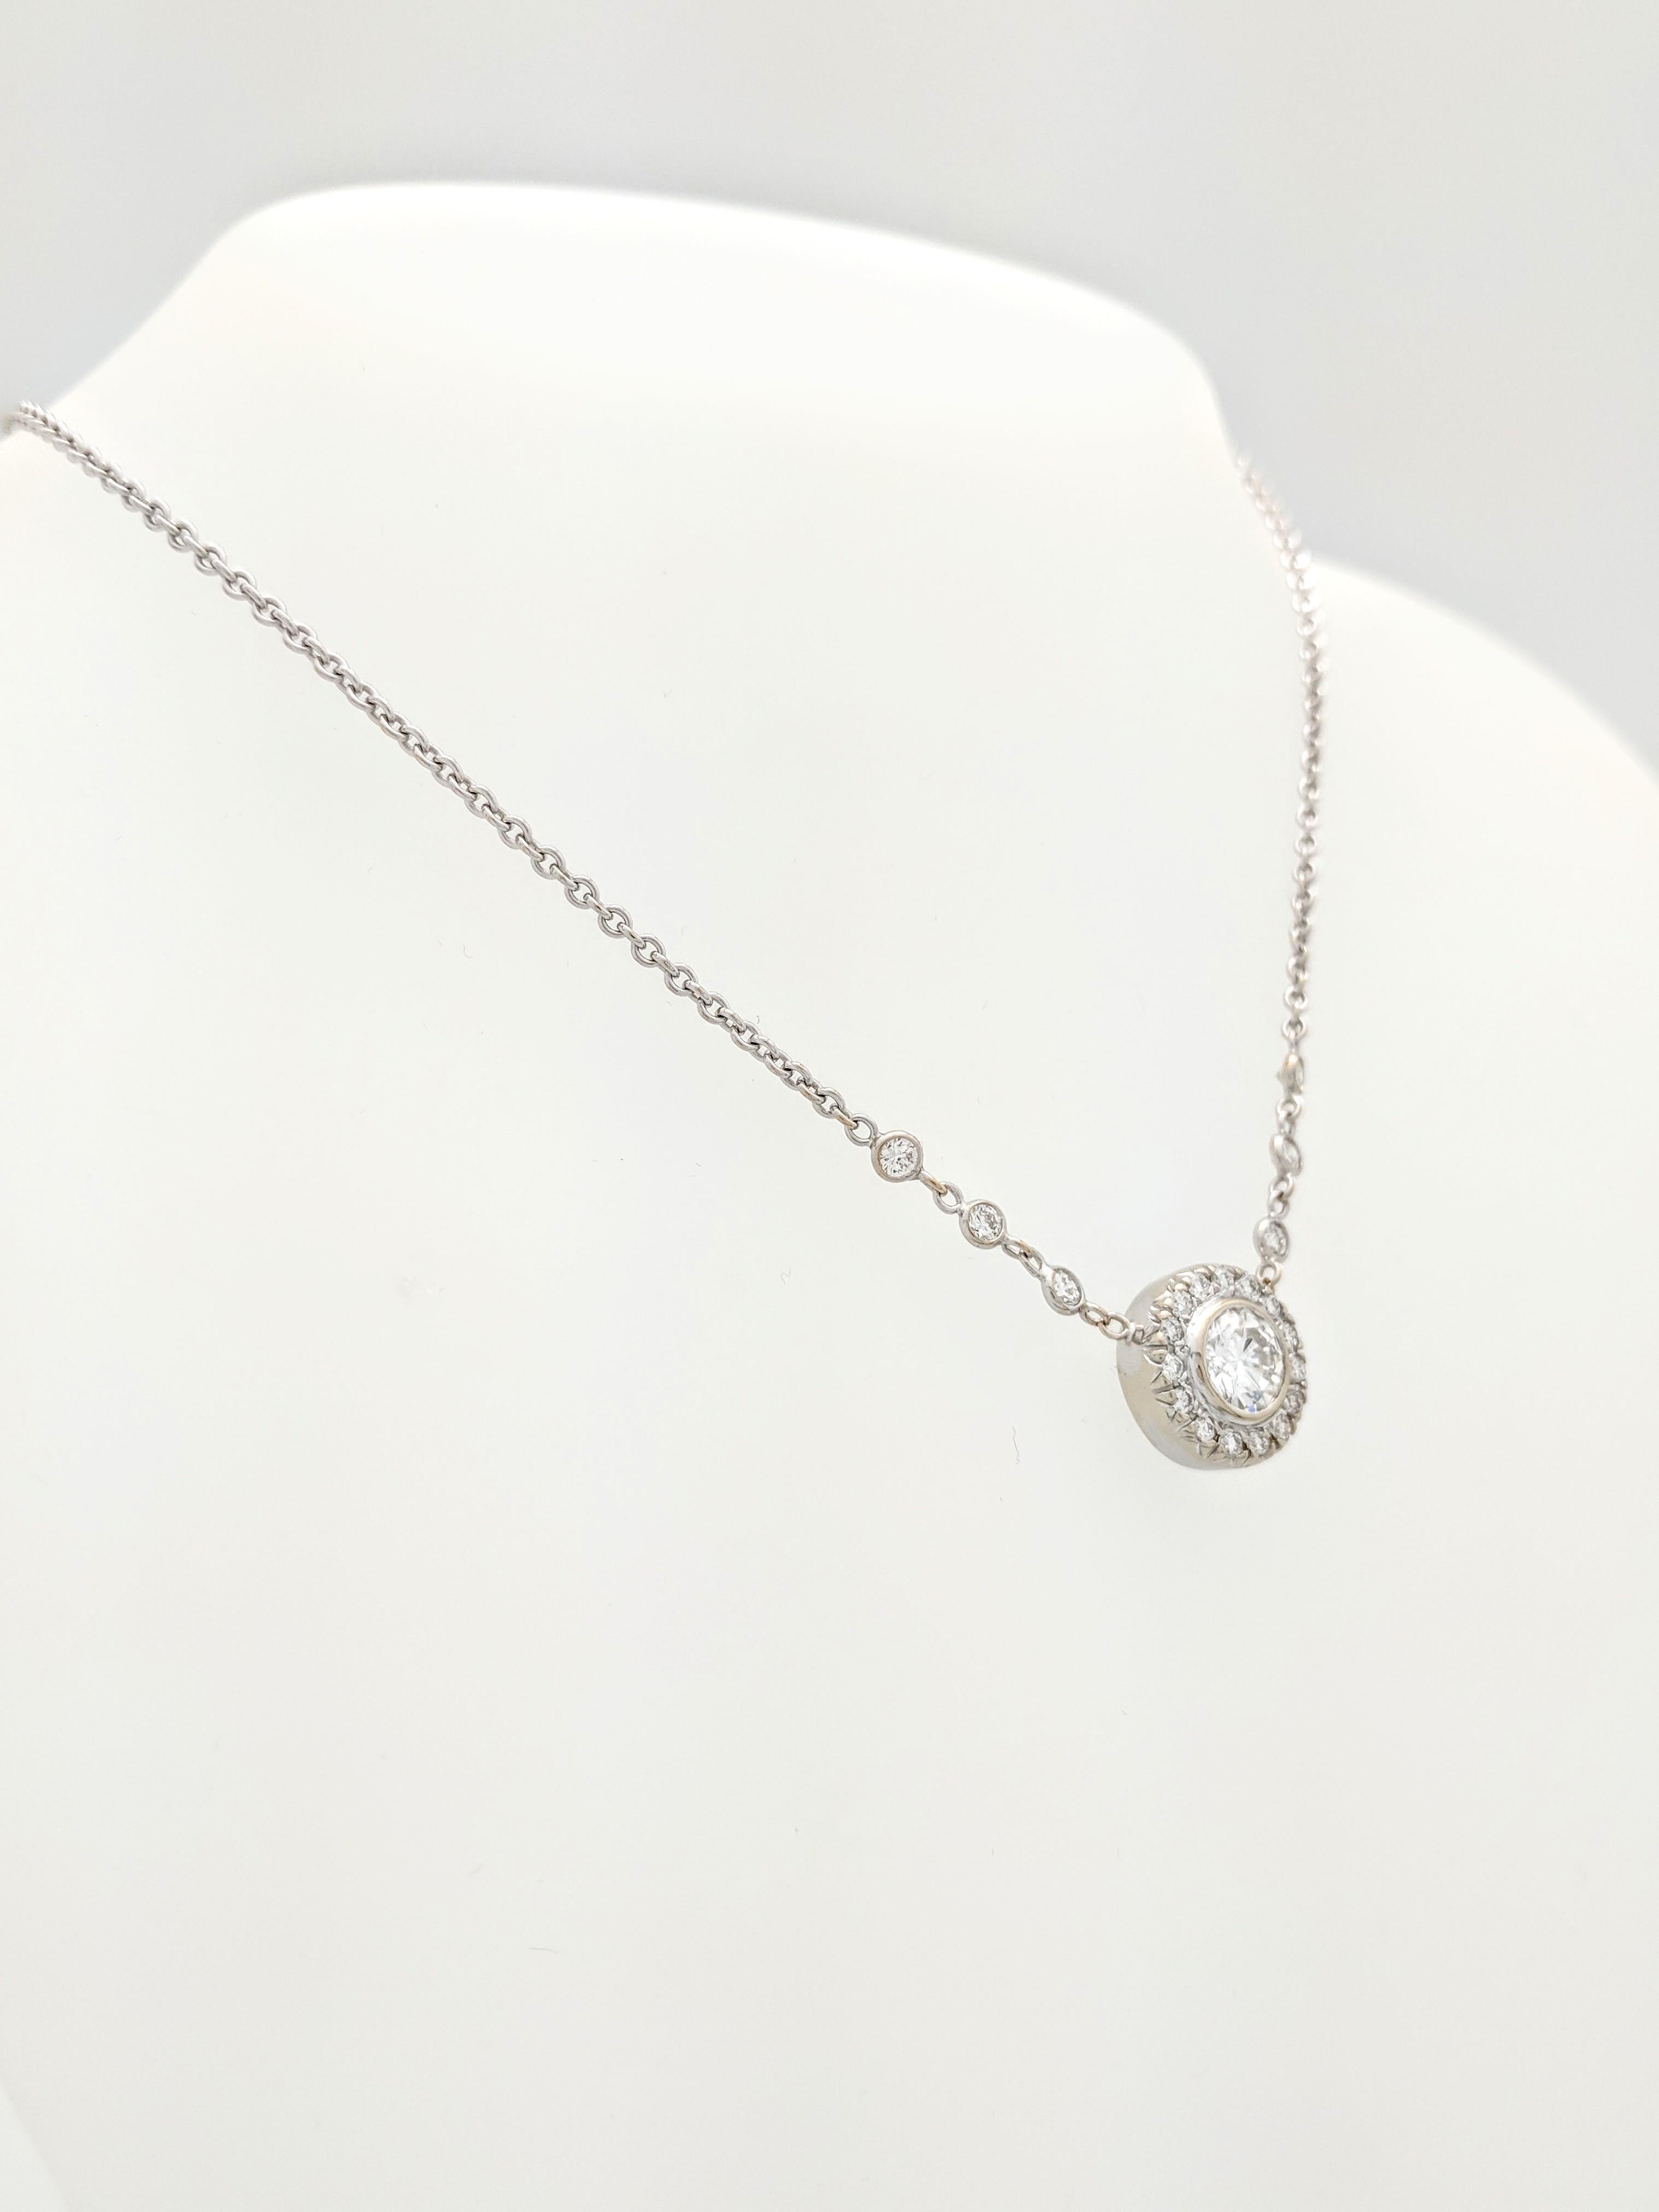 Contemporary 1.10 Carat Round Diamond Bezel Set in 18 Karat White Gold Halo Pendant Necklace